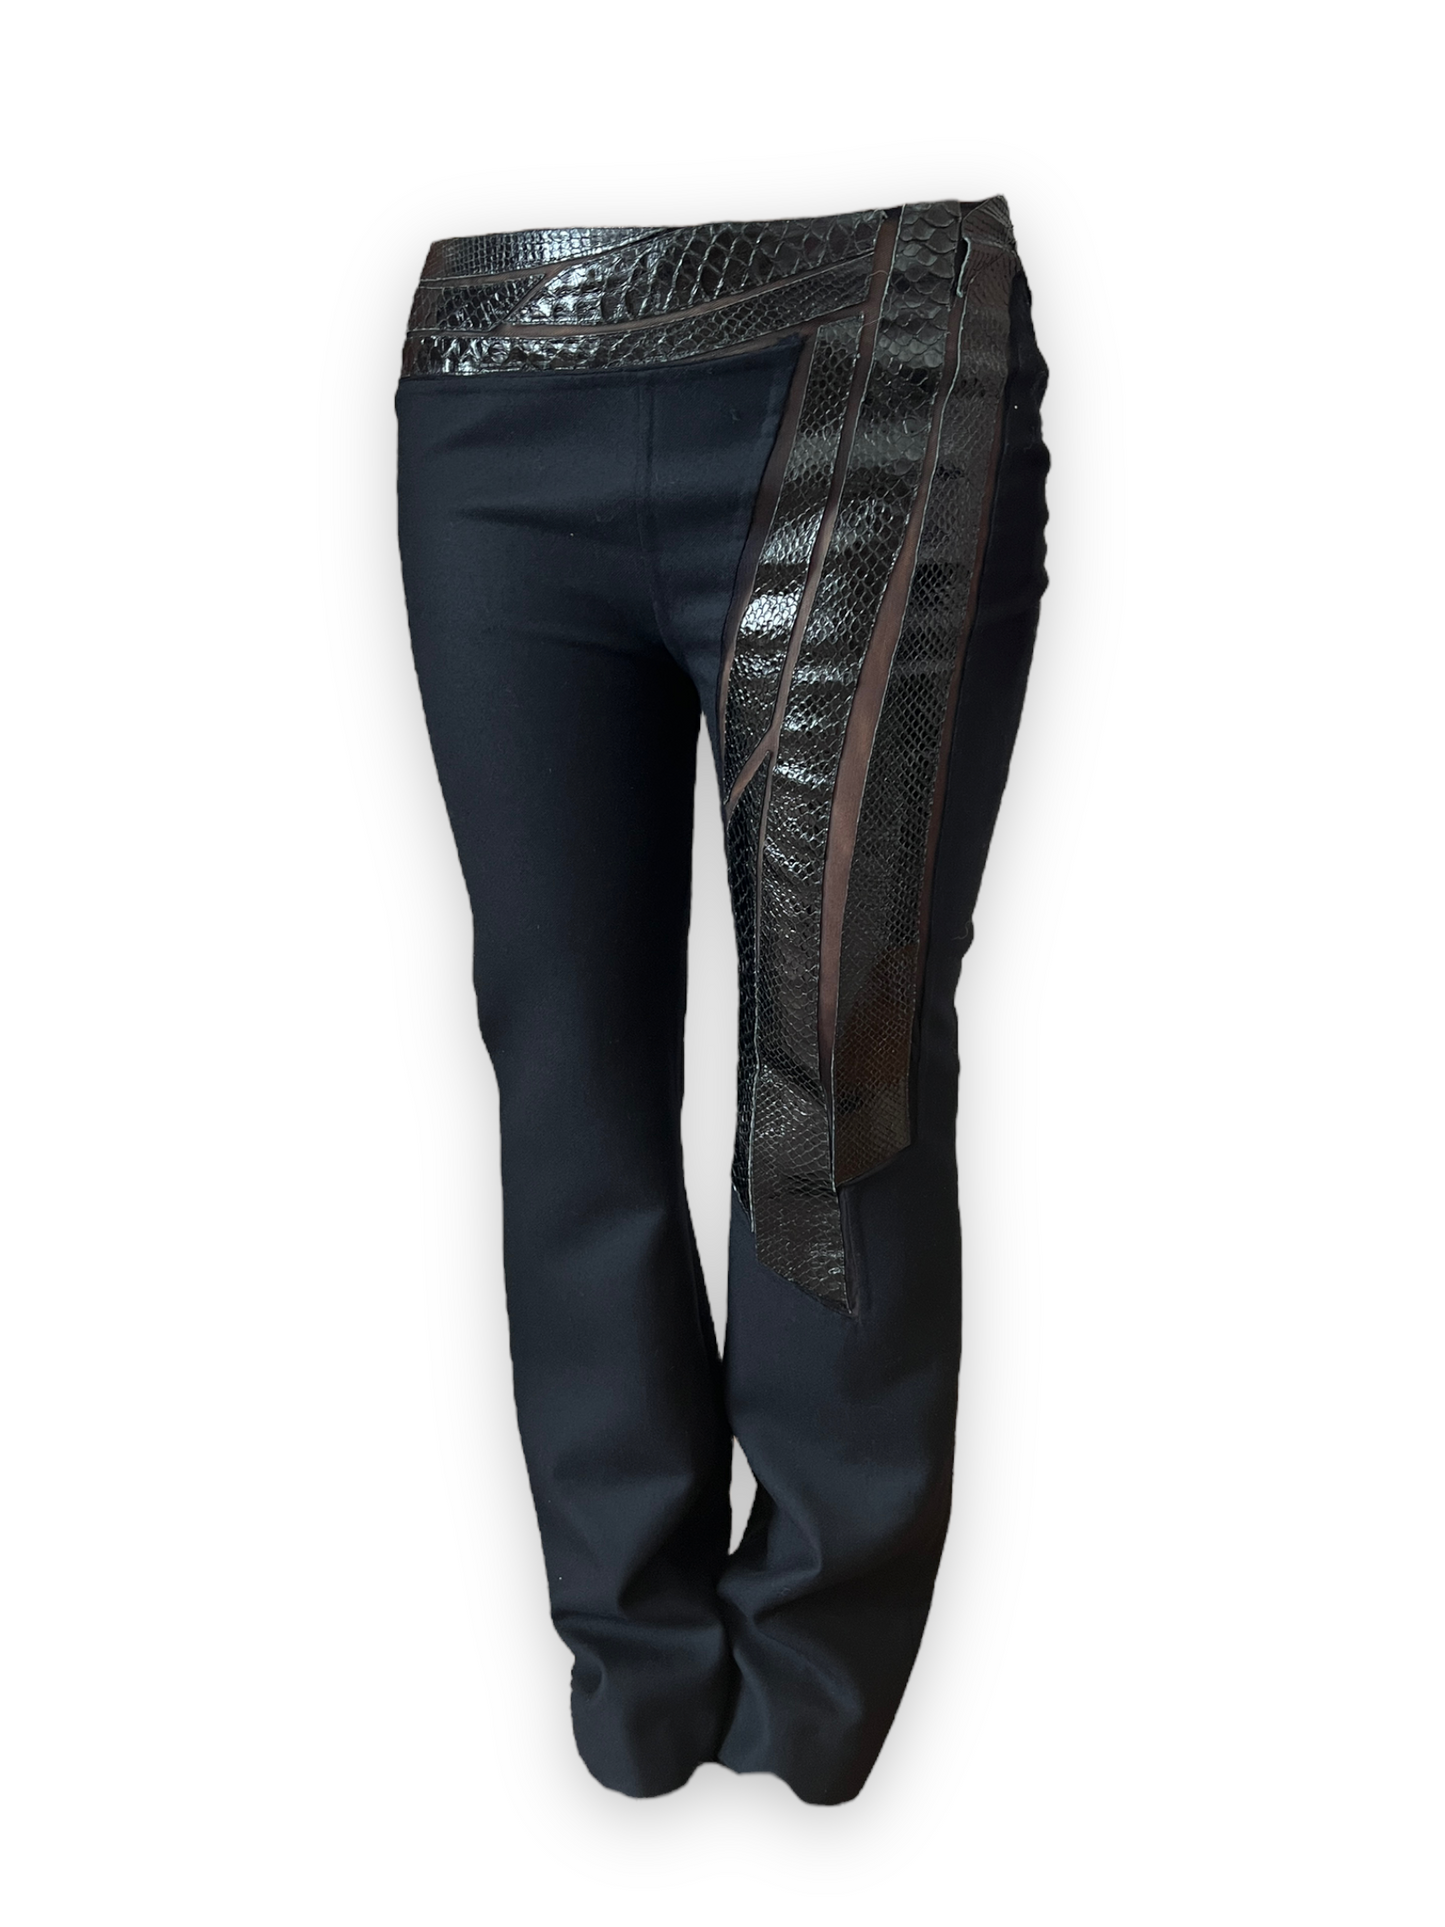 Gianni Versace 90s Wool + Snakeskin Sheer Mesh Cutout Pants